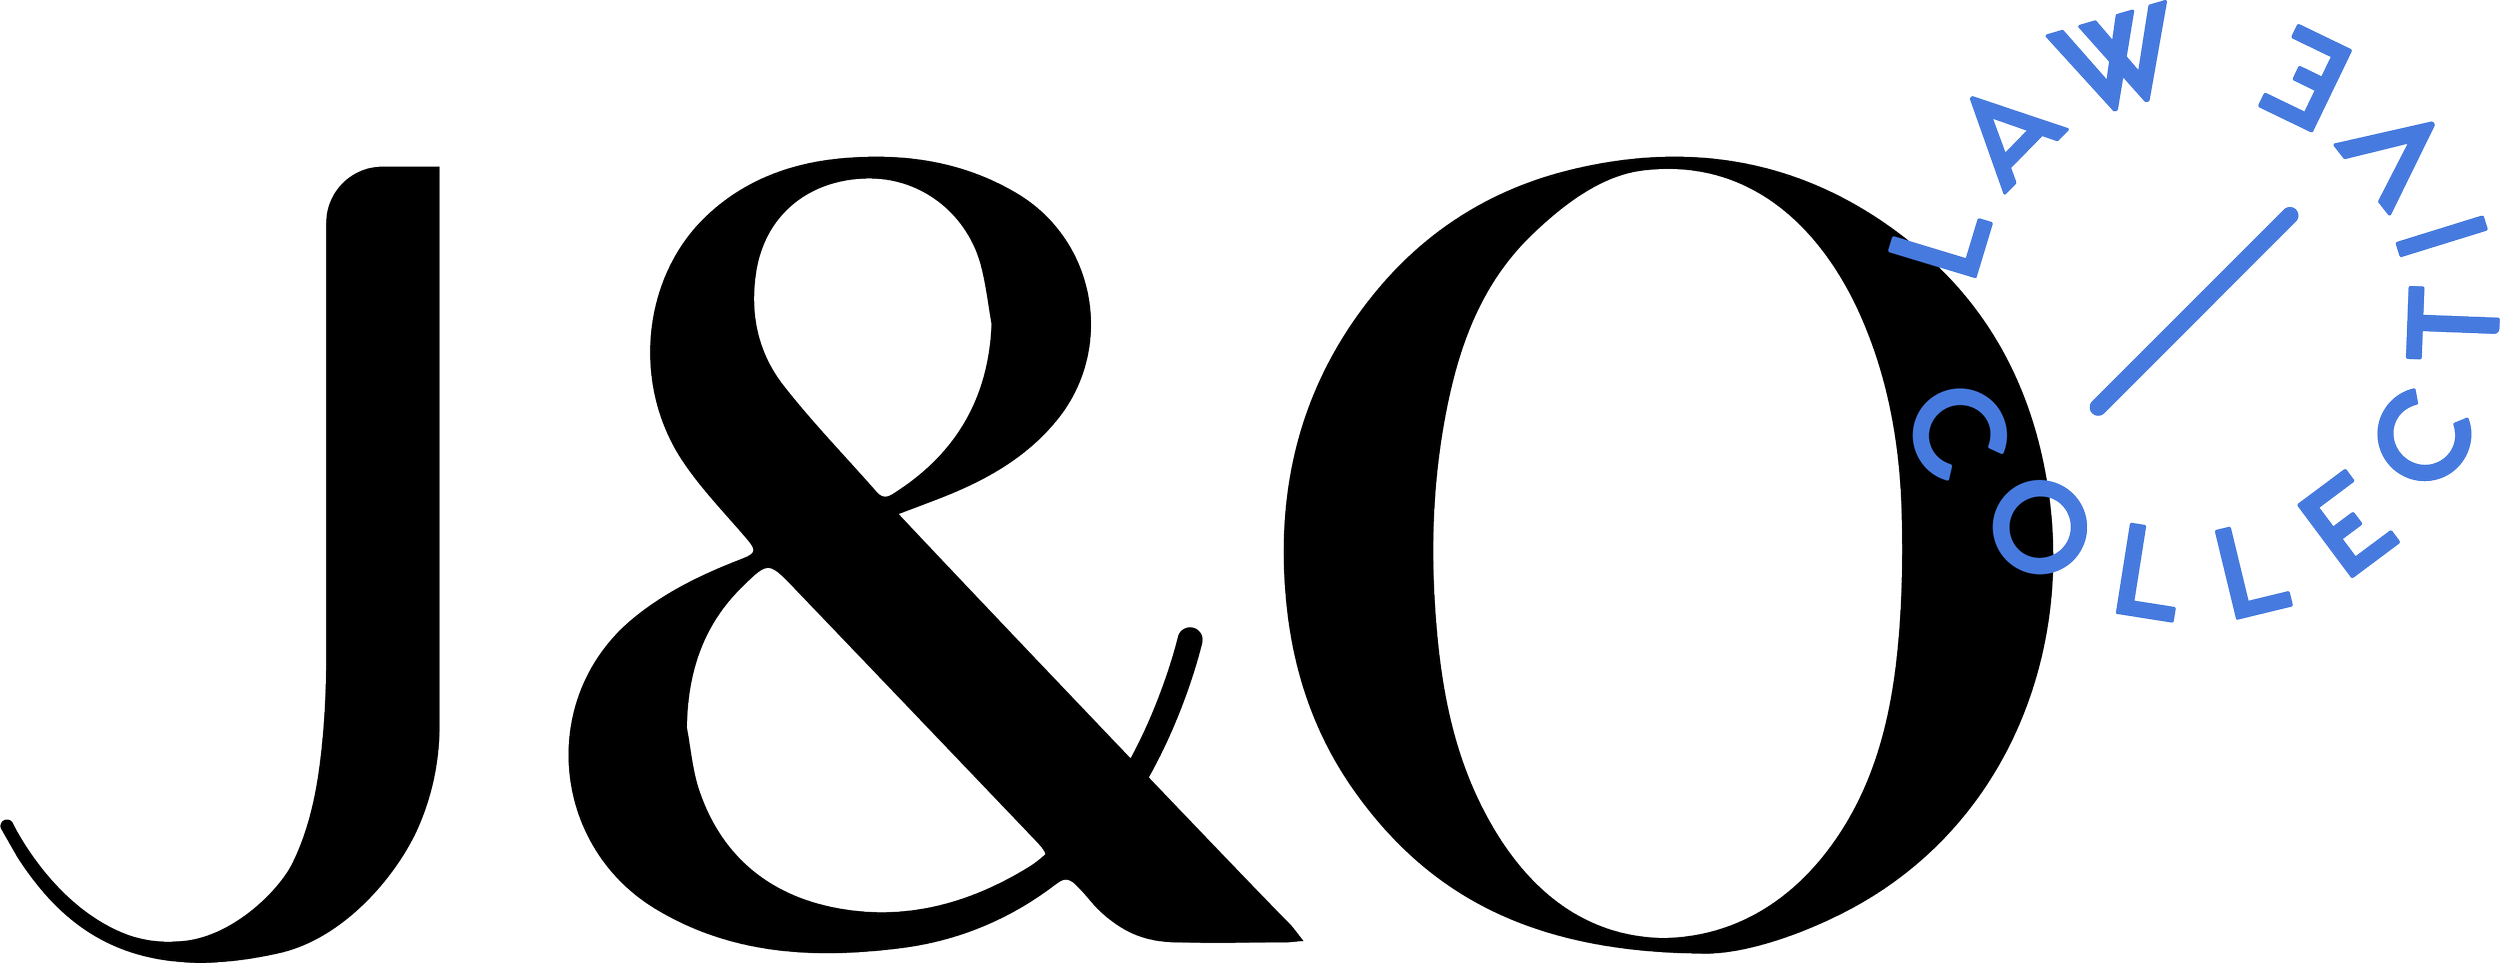 J&O Law Logo.png